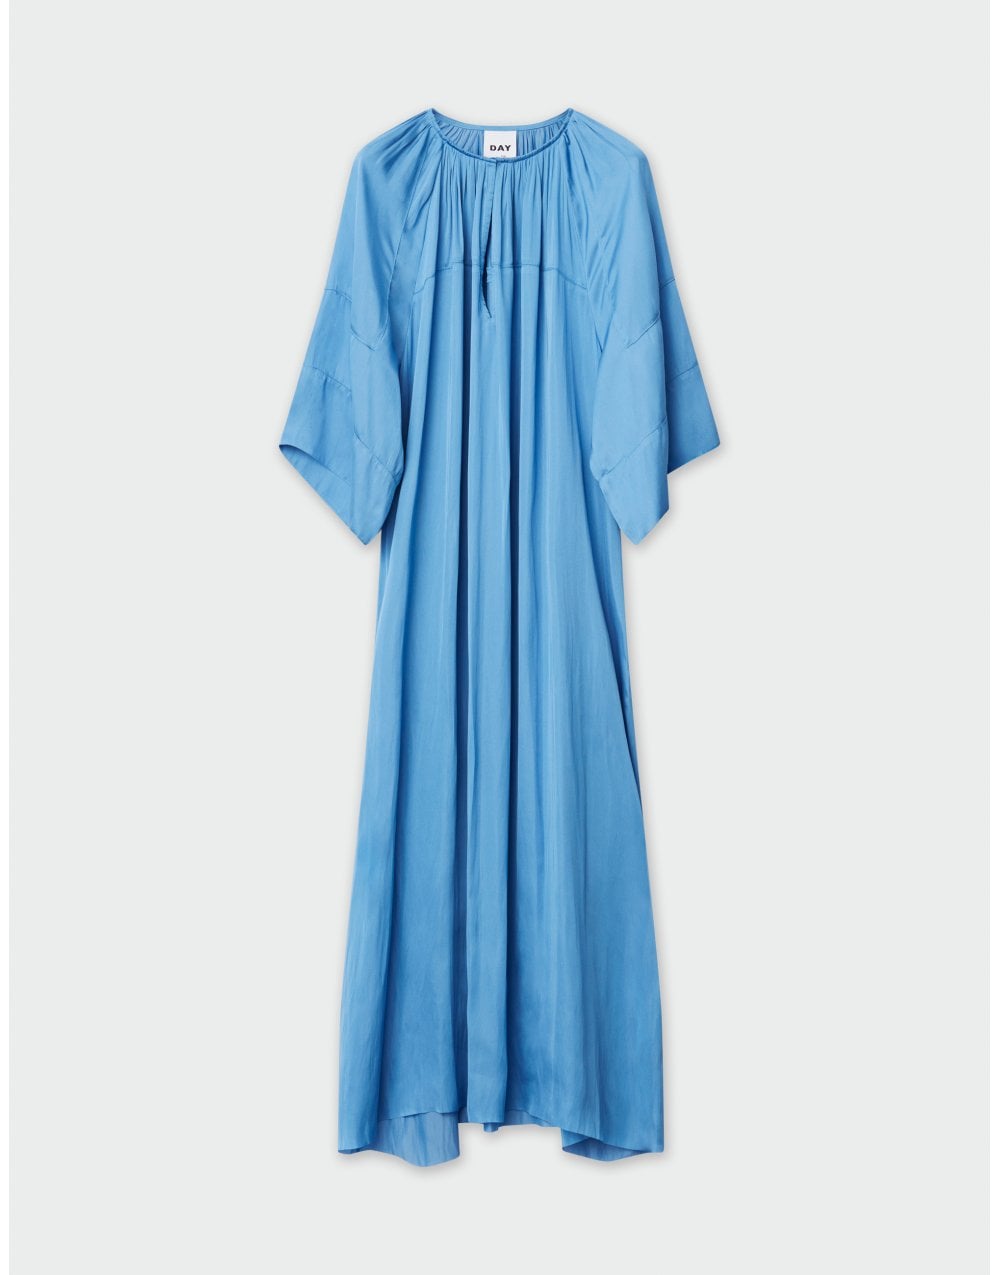 DAY Birger Day Birger Jaden Modern Drape Dress Col: Silver Lake Blue, Size: 36